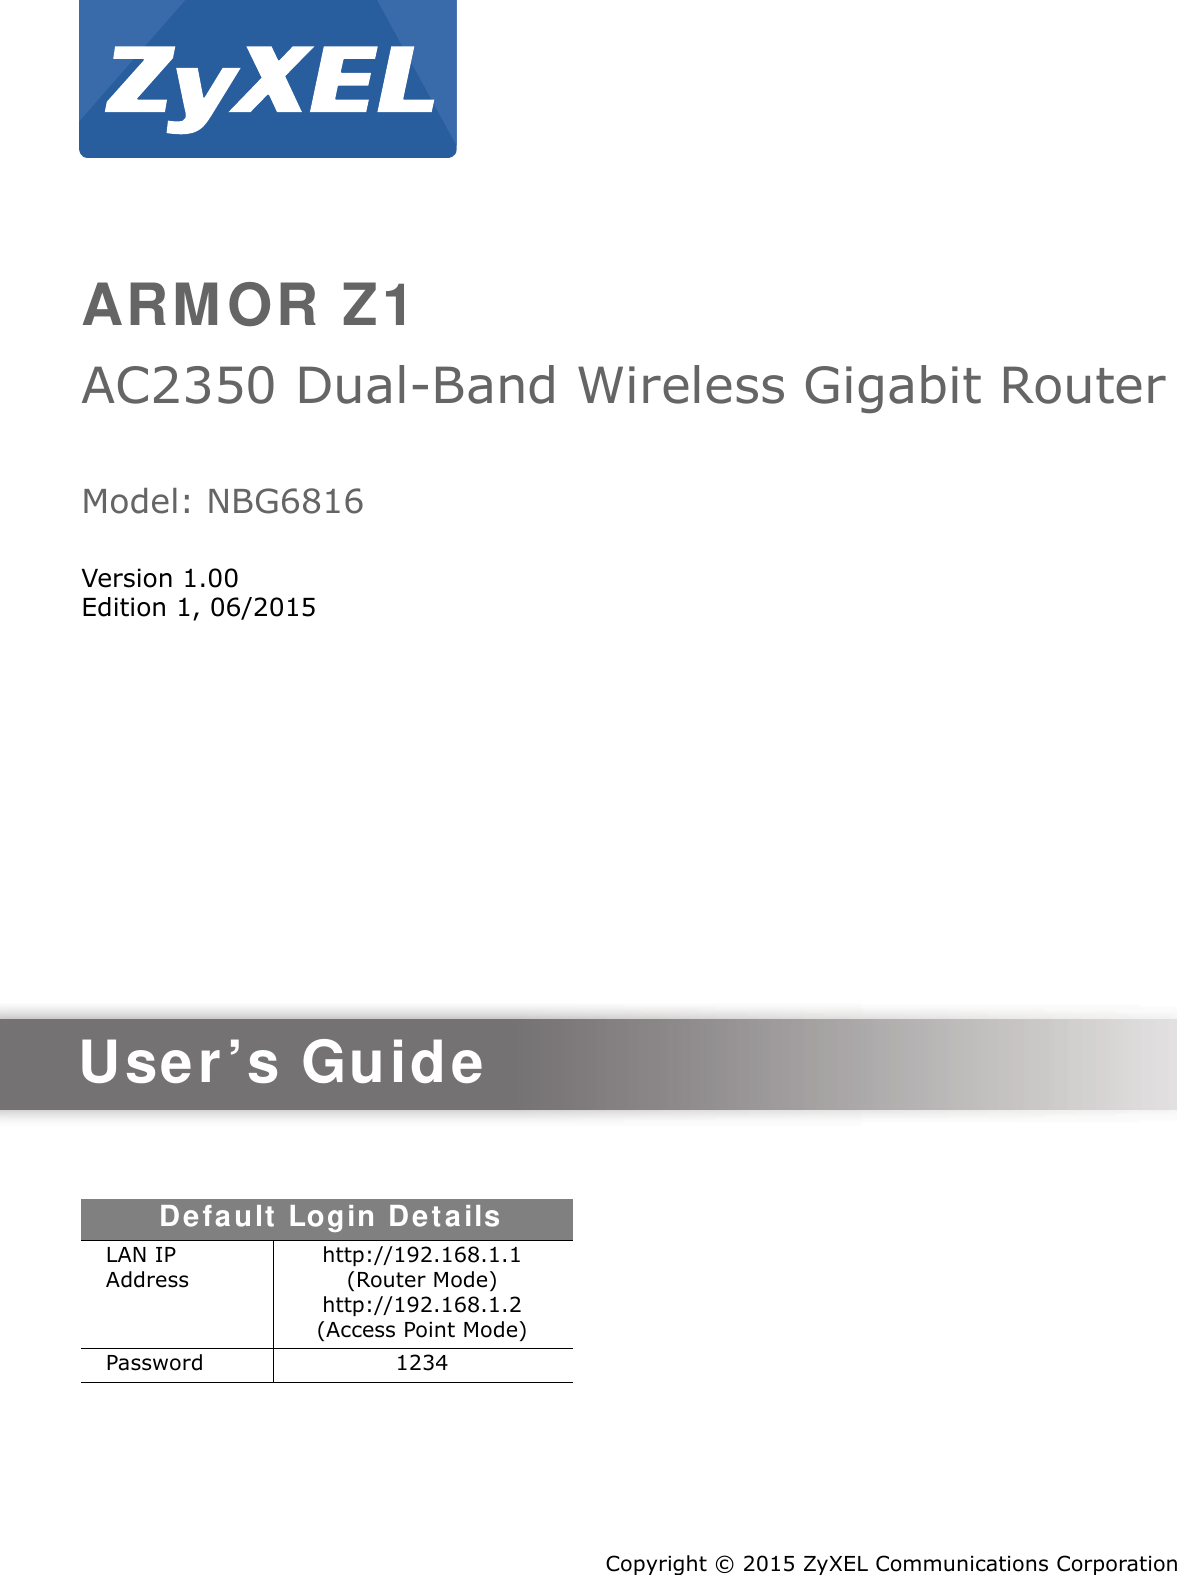 Quick Start Guidewww.zyxel.comARMOR Z1AC2350 Dual-Band Wireless Gigabit RouterModel: NBG6816Version 1.00Edition 1, 06/2015Copyright © 2015 ZyXEL Communications CorporationUser’s GuideDefault Login DetailsLAN IP Address http://192.168.1.1 (Router Mode)http://192.168.1.2 (Access Point Mode)Password 1234